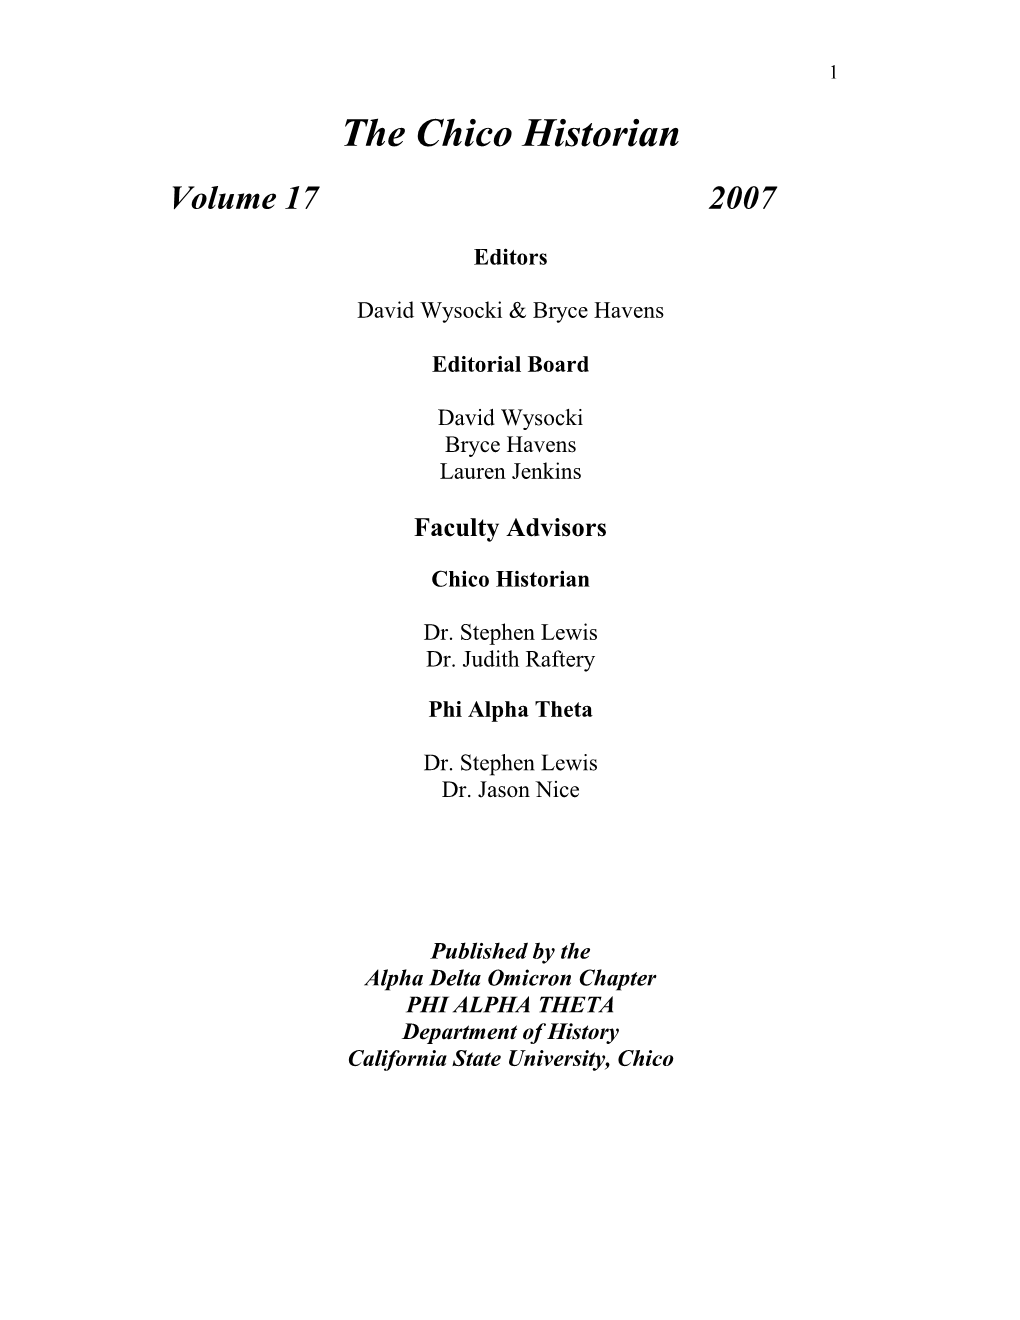 Volume 17, 2007 (PDF)